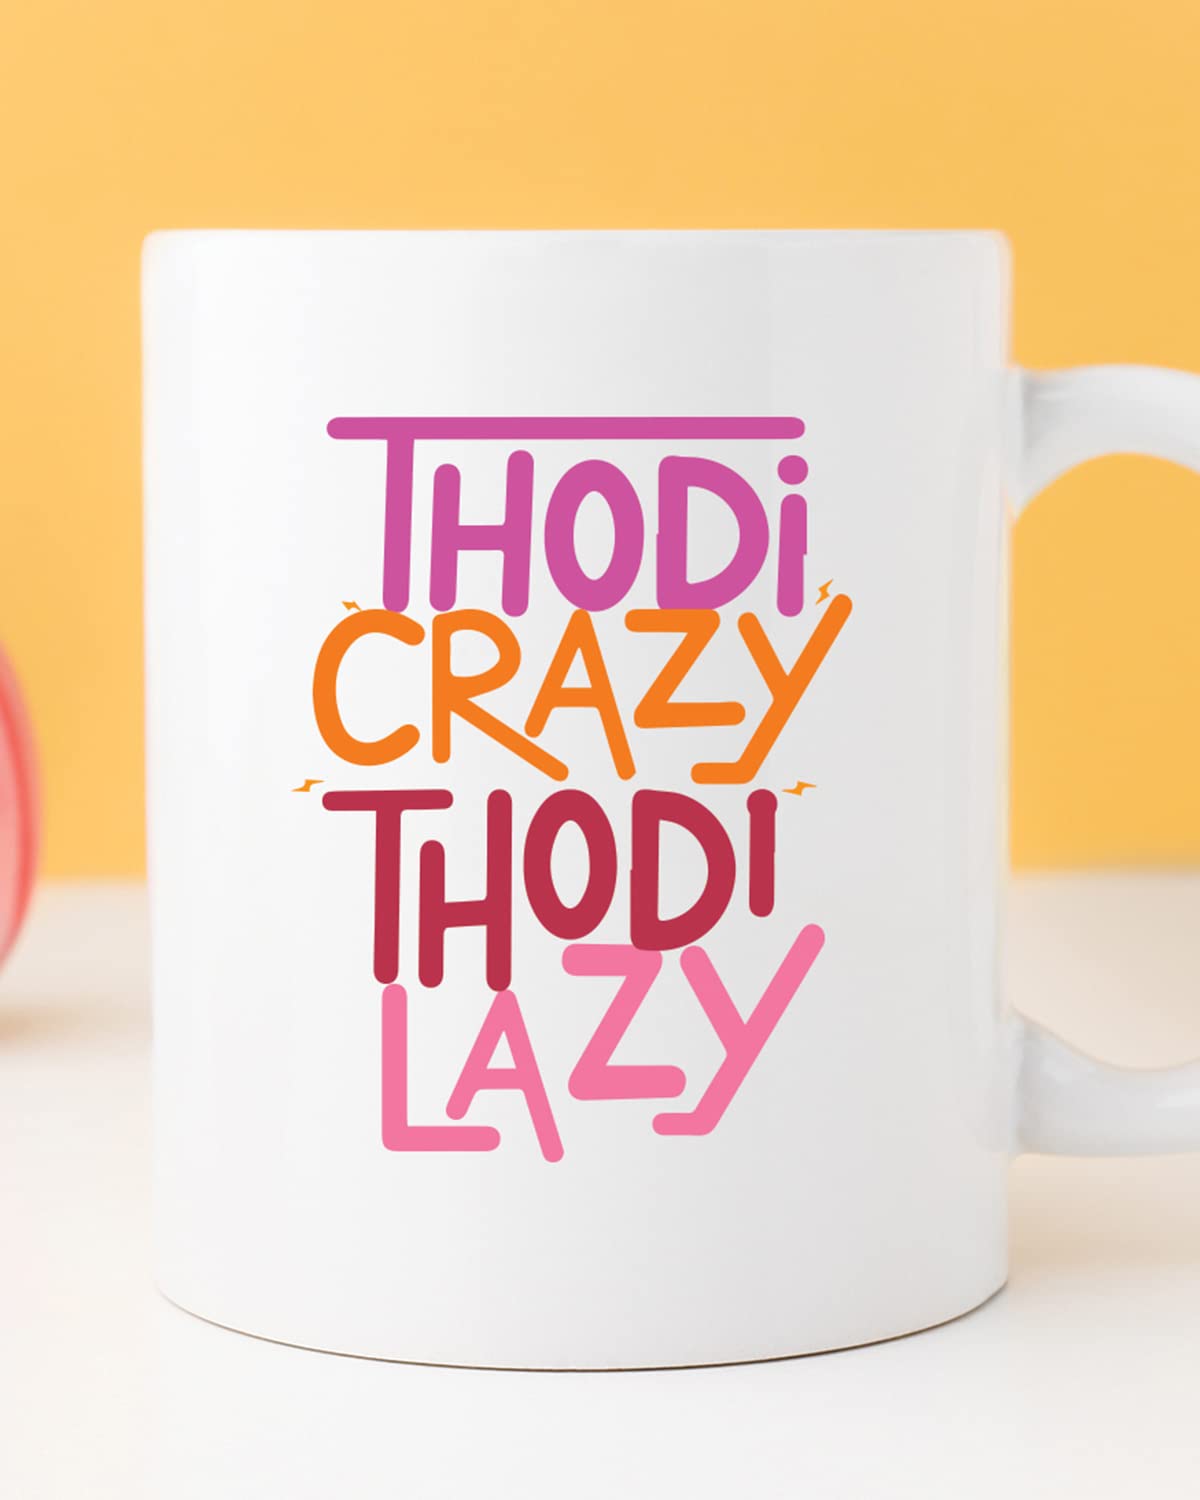 THODI Crazy THODI Lazy Coffee Mug - Gift for Friend, Birthday Gift, Birthday Mug, Motivational Quotes Mug, Mugs with Funny & Funky Dialogues, Bollywood Mugs, Funny Mugs for Him & Her